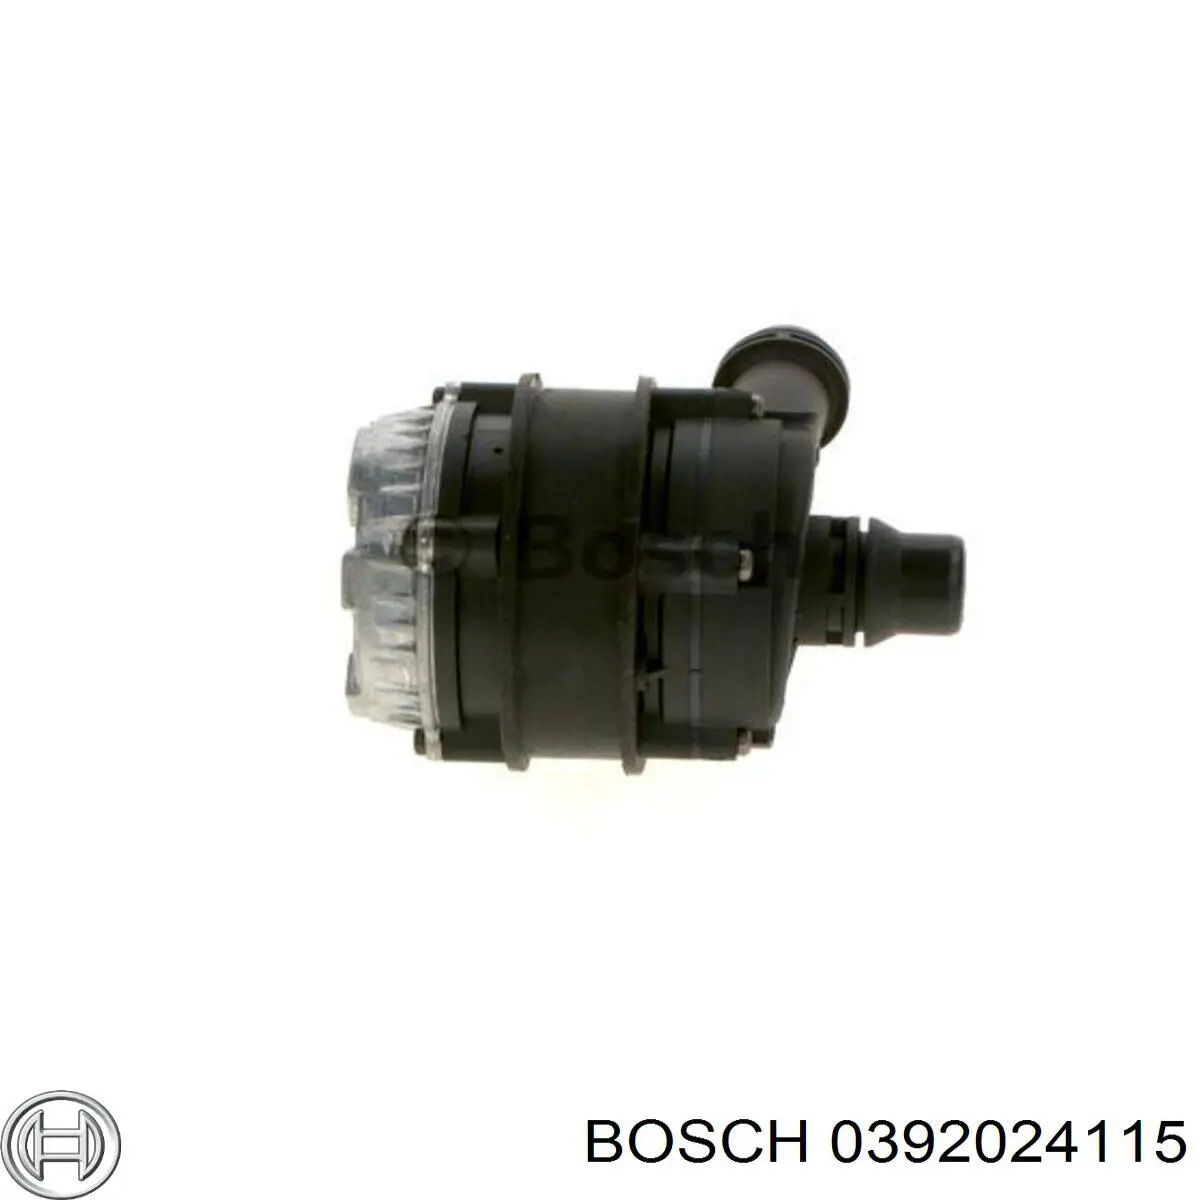 0392024115 Bosch bomba de água (bomba de esfriamento, adicional elétrica)